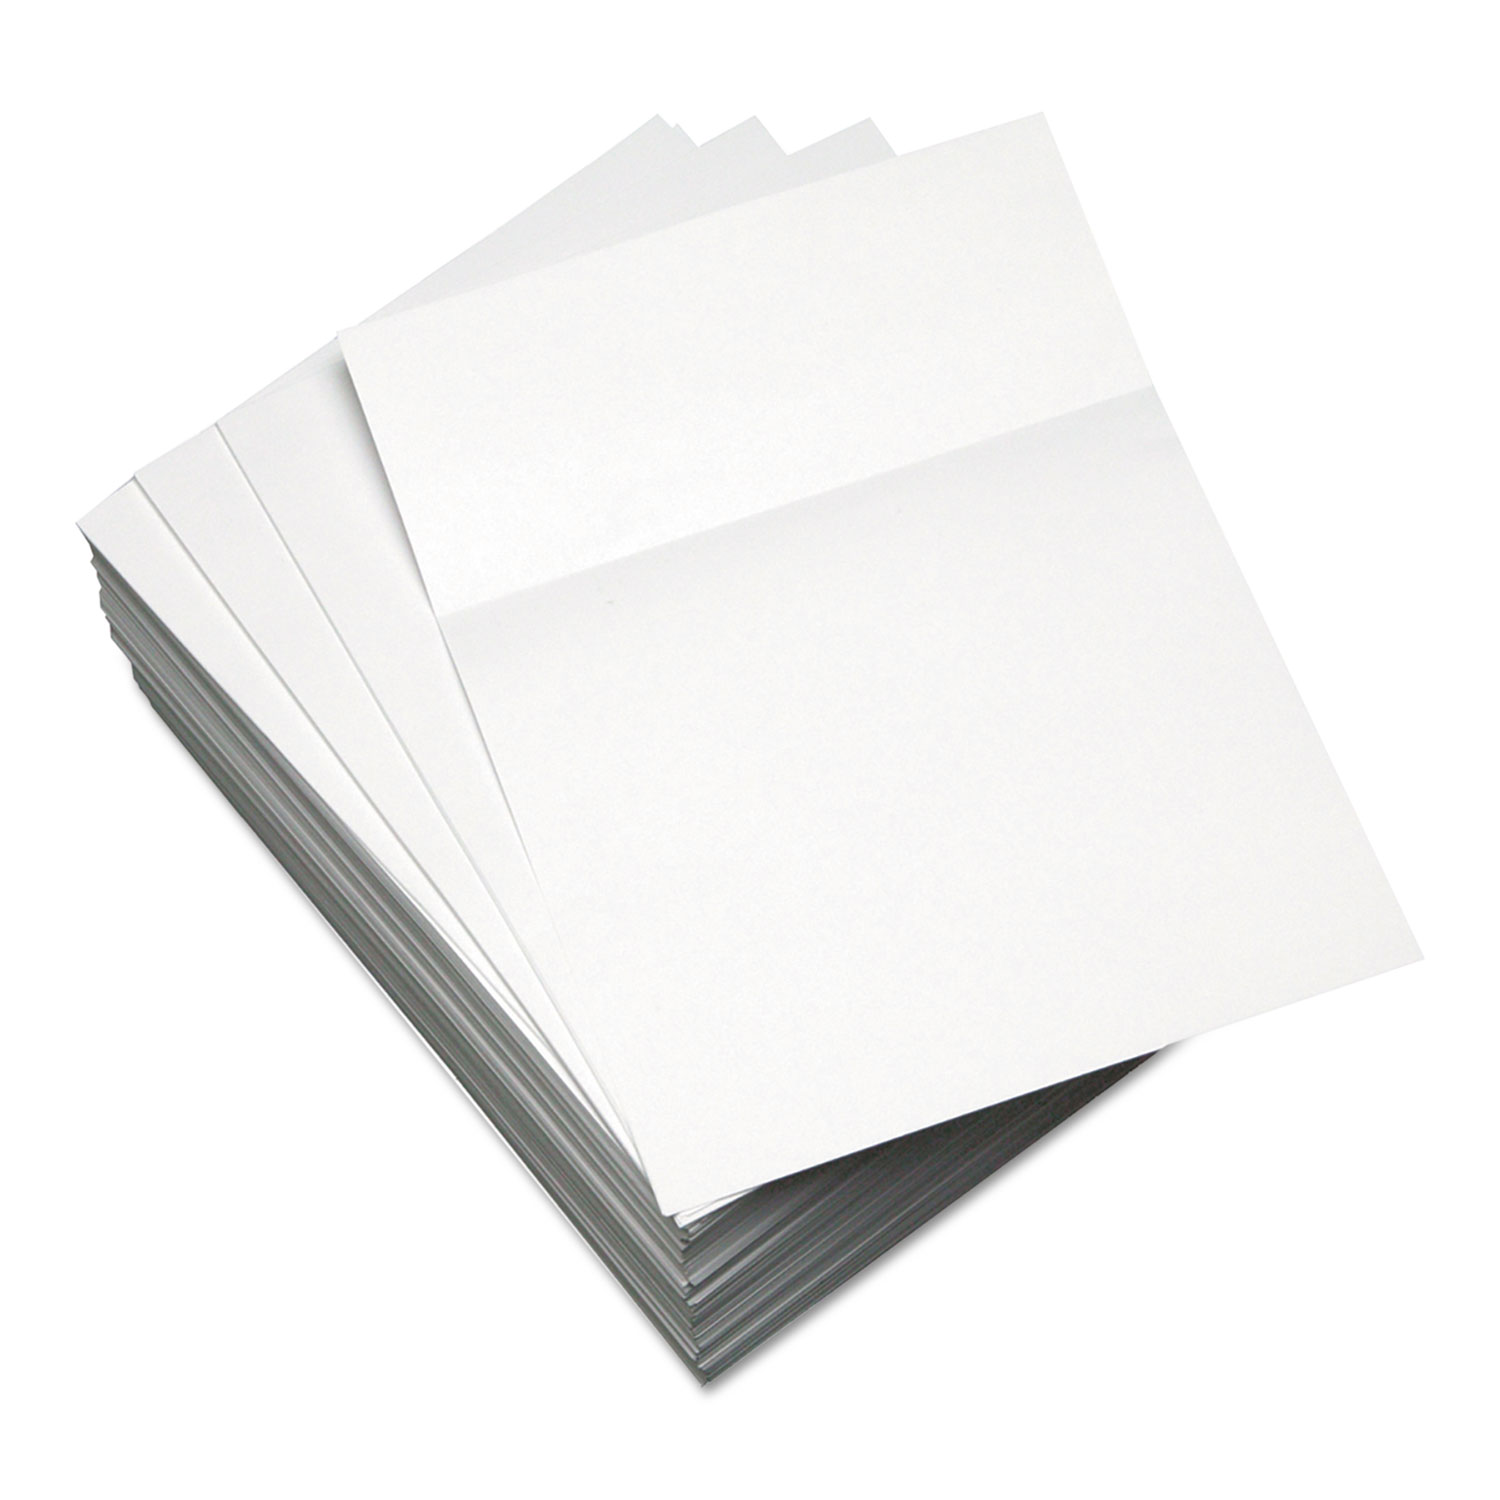  Domtar 851037 Custom Cut-Sheet Copy Paper, 92 Bright, 20lb, 8.5 x 11, White, 500/Ream (DMR851037) 